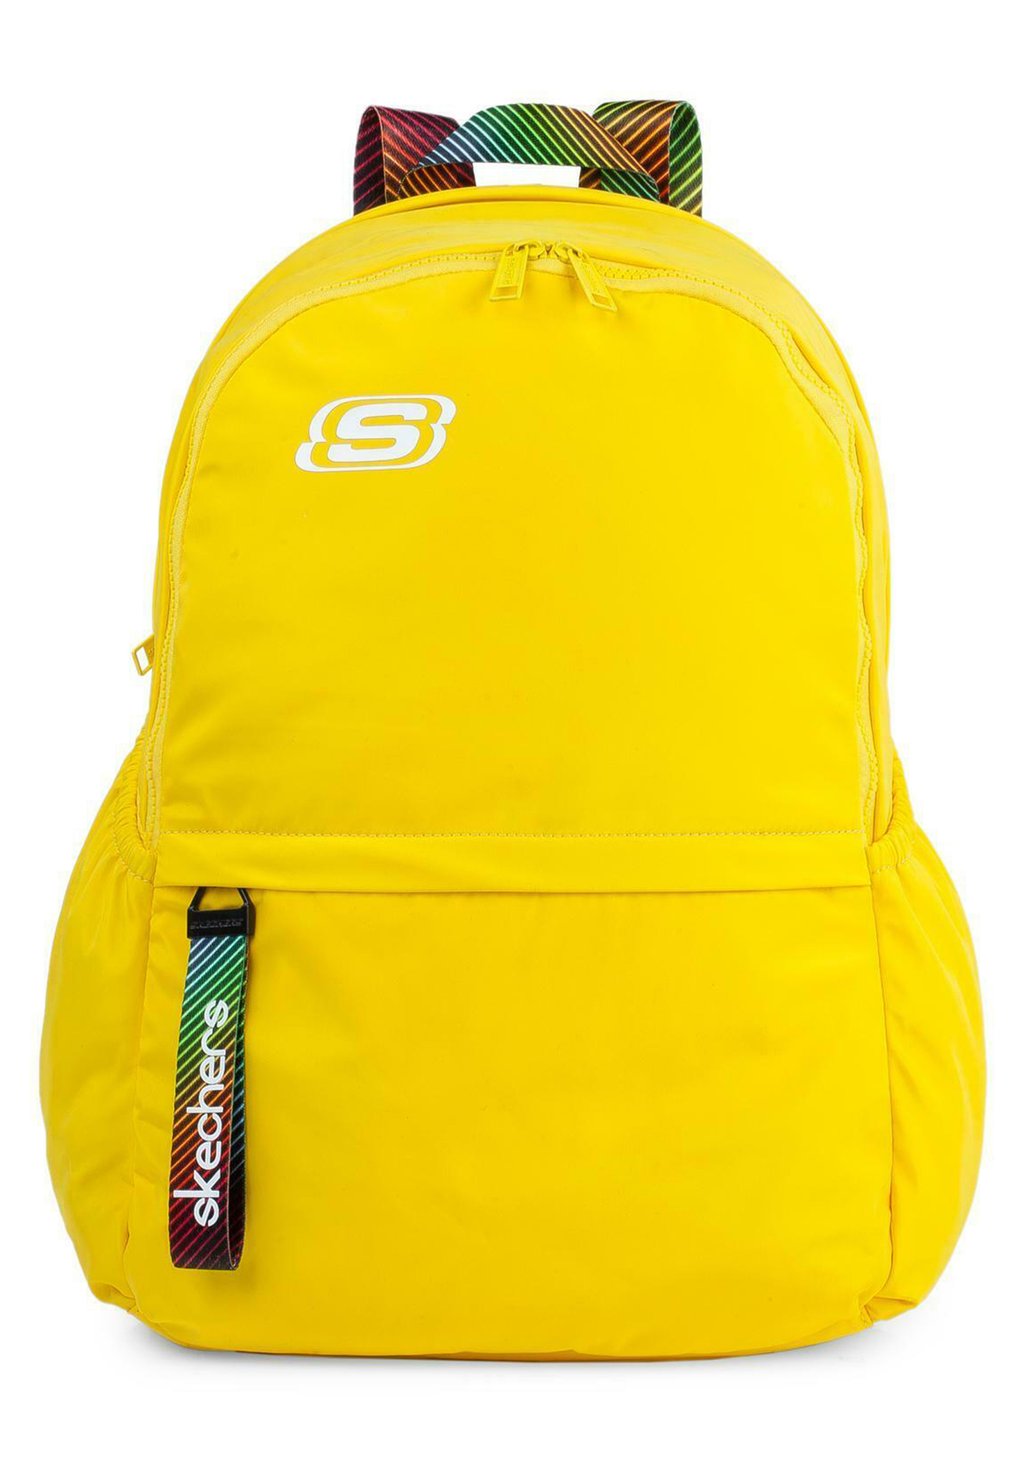 Рюкзак MAYAH Skechers, желтый рюкзак skechers желтый